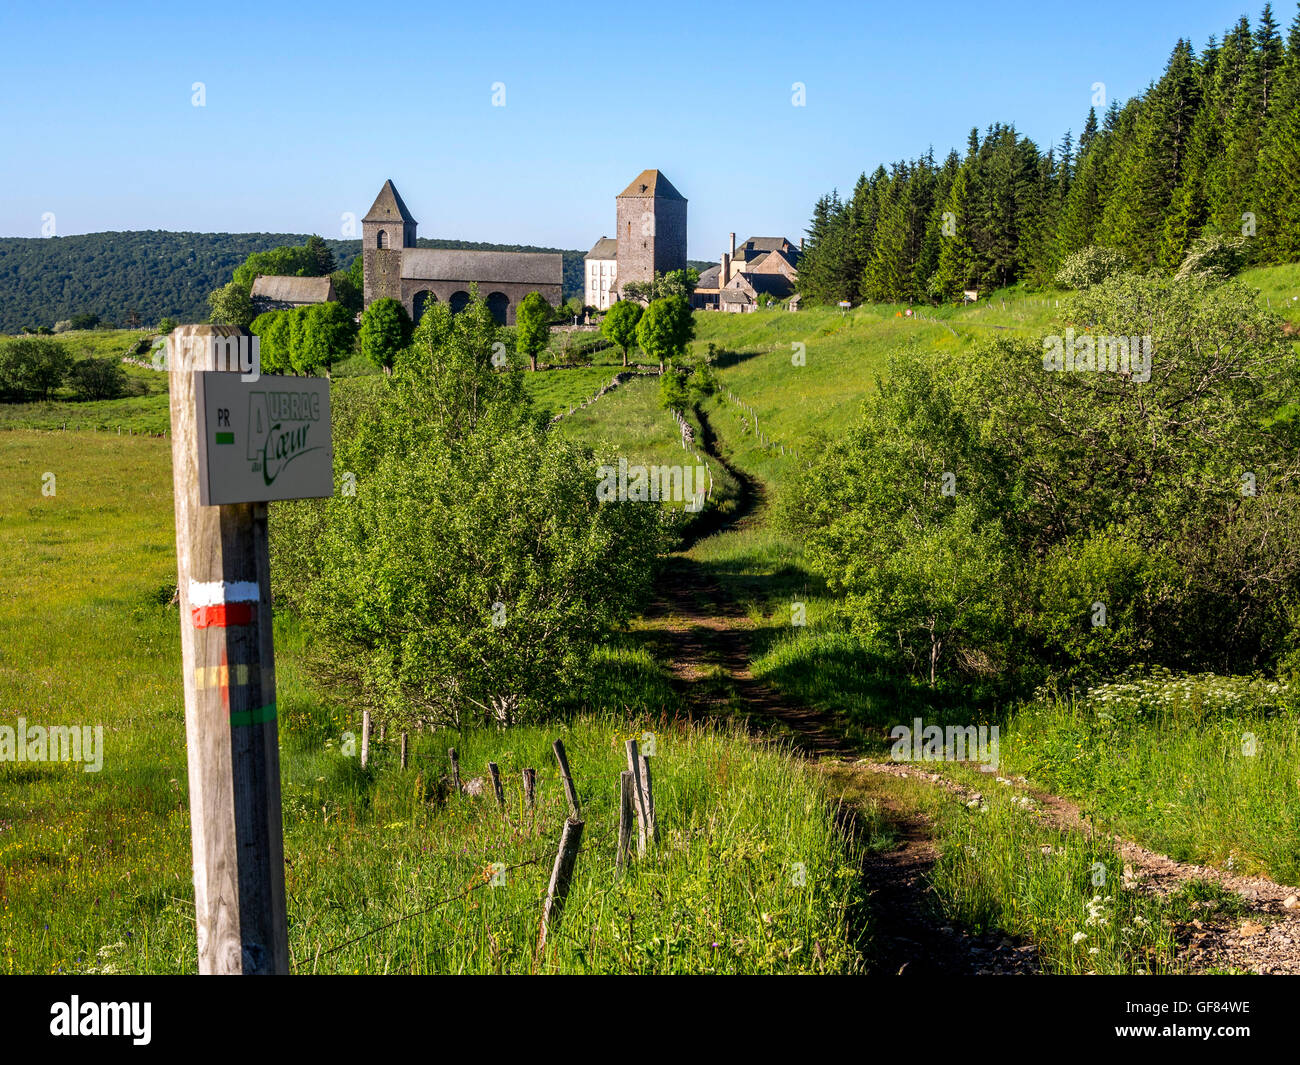 Aubrac villaggio sulla via Podiensis, Saint james way, Aveyron, Languedoc-Roussillon-regione Midi-Pyrénées, in Francia Foto Stock